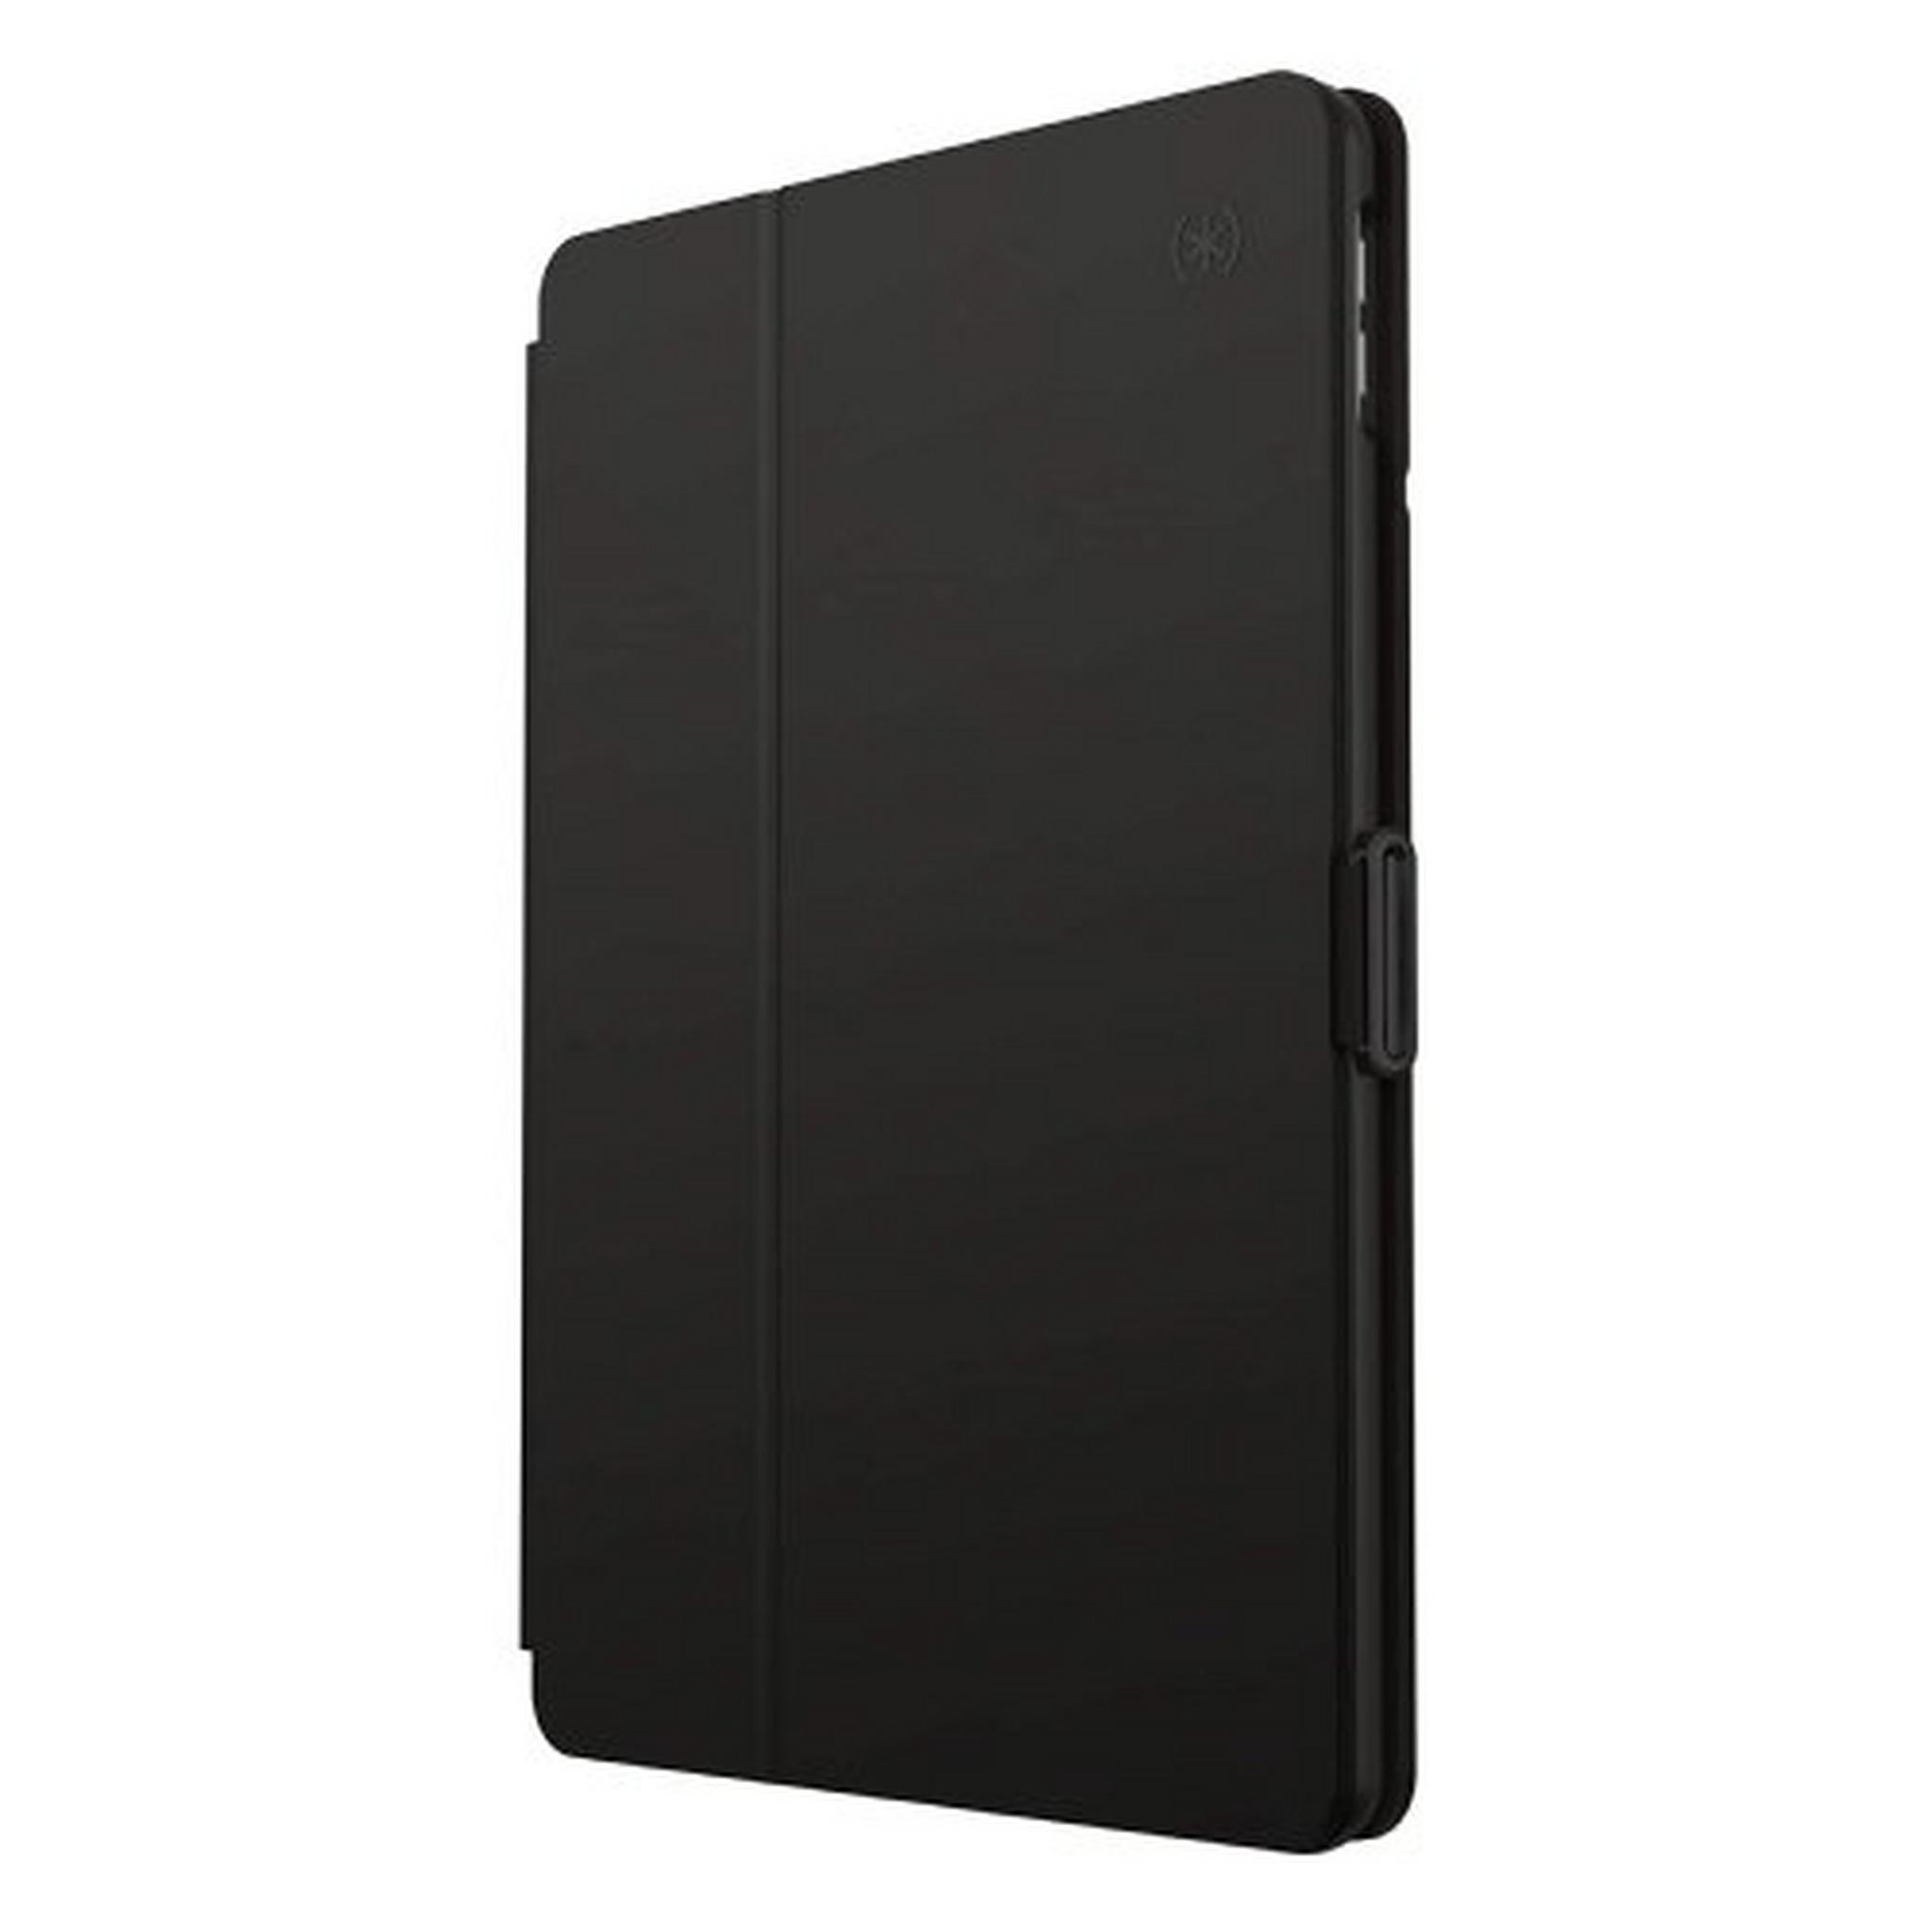 Speck Balance Folio 10.2-inch iPad Case - Black